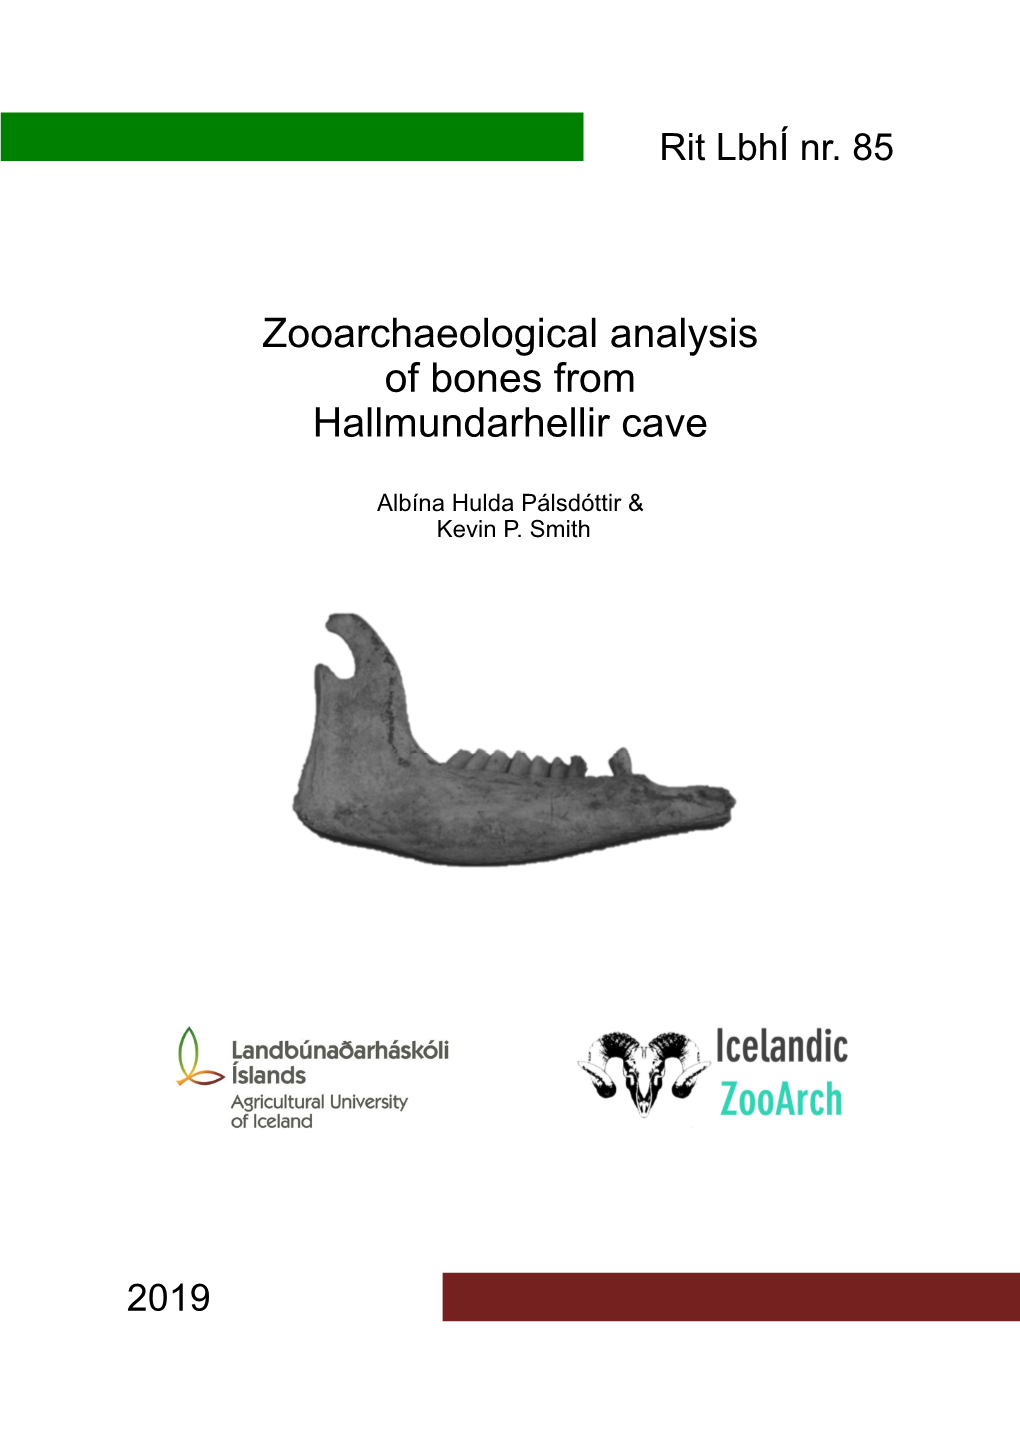 Zooarchaeological Analysis of Bones from Hallmundarhellir Cave